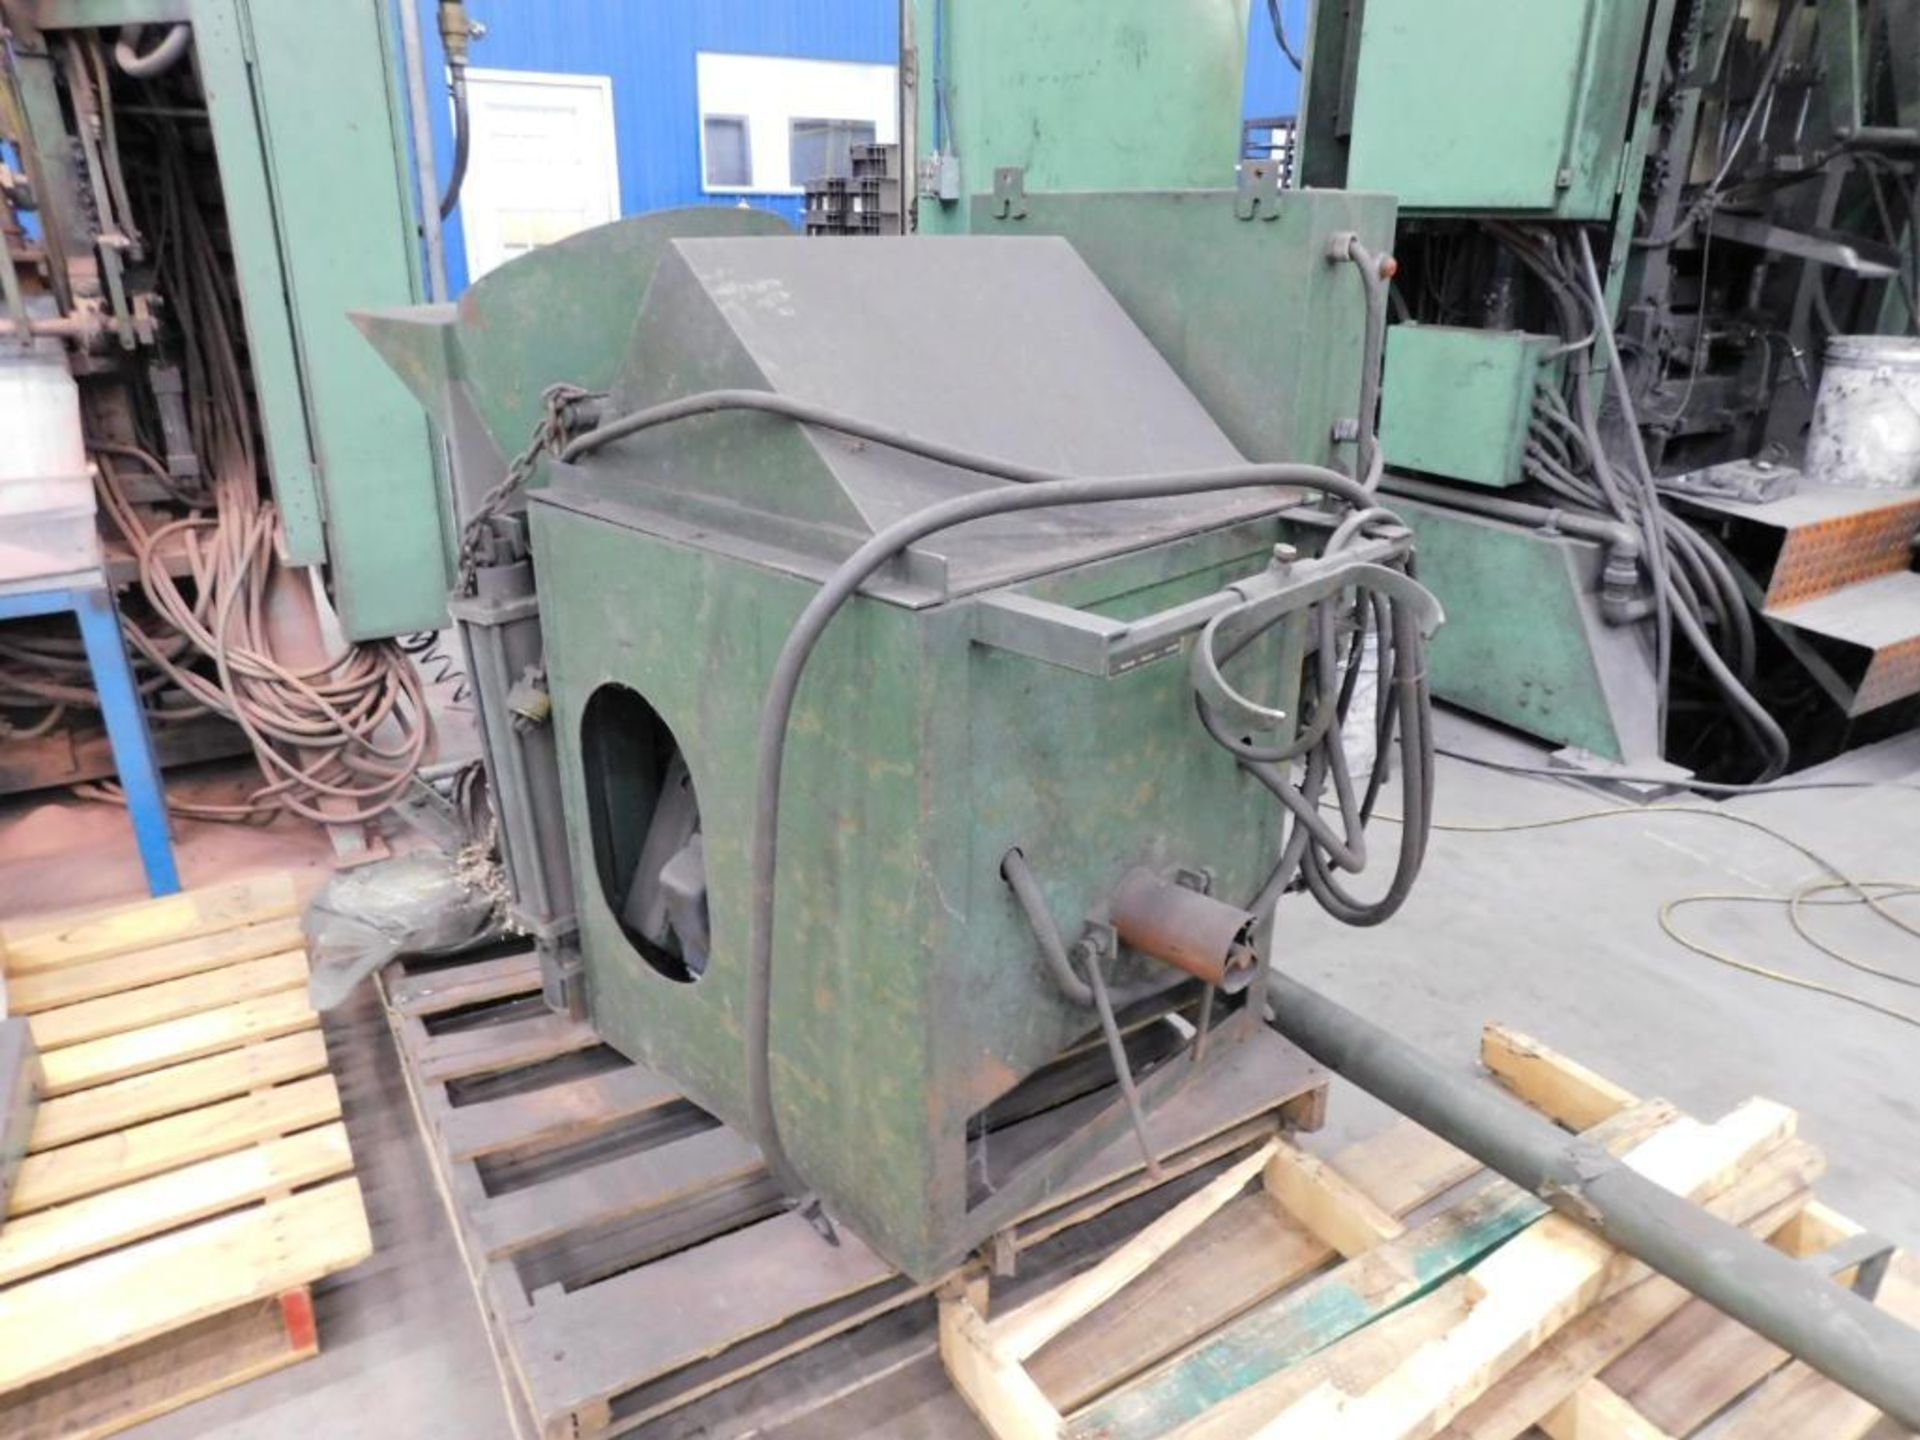 Gasbarre Powder Compacting Press, Mechanical, Model 30 Standard, S/N: 86256, 30 Ton Maximum Pressing - Image 15 of 22